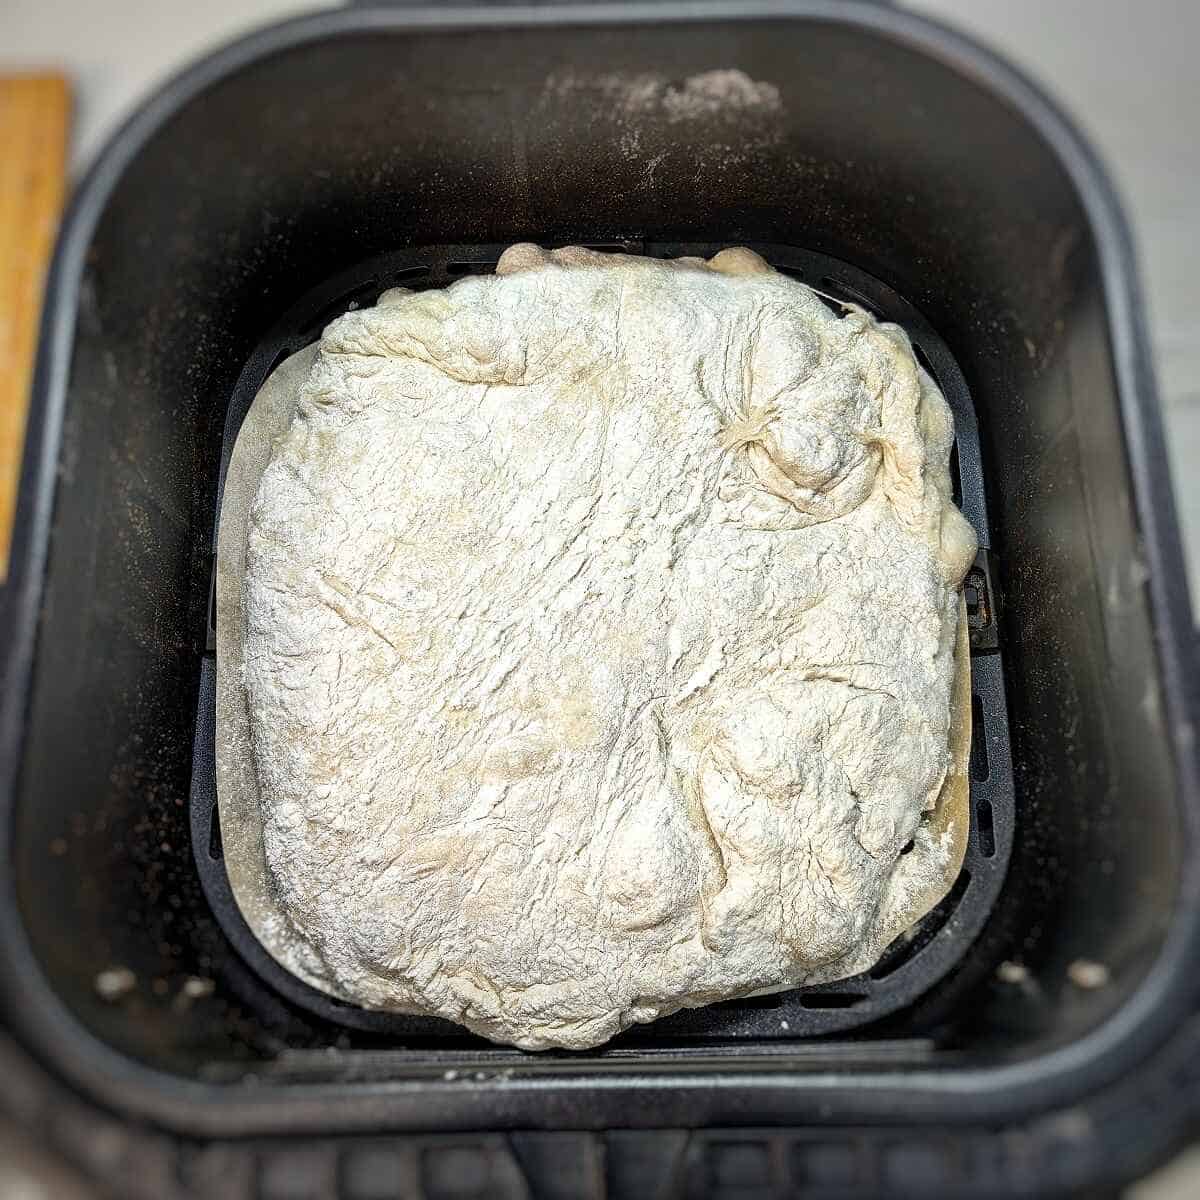 ciabatta dough insider air fryer basket with parchment liner